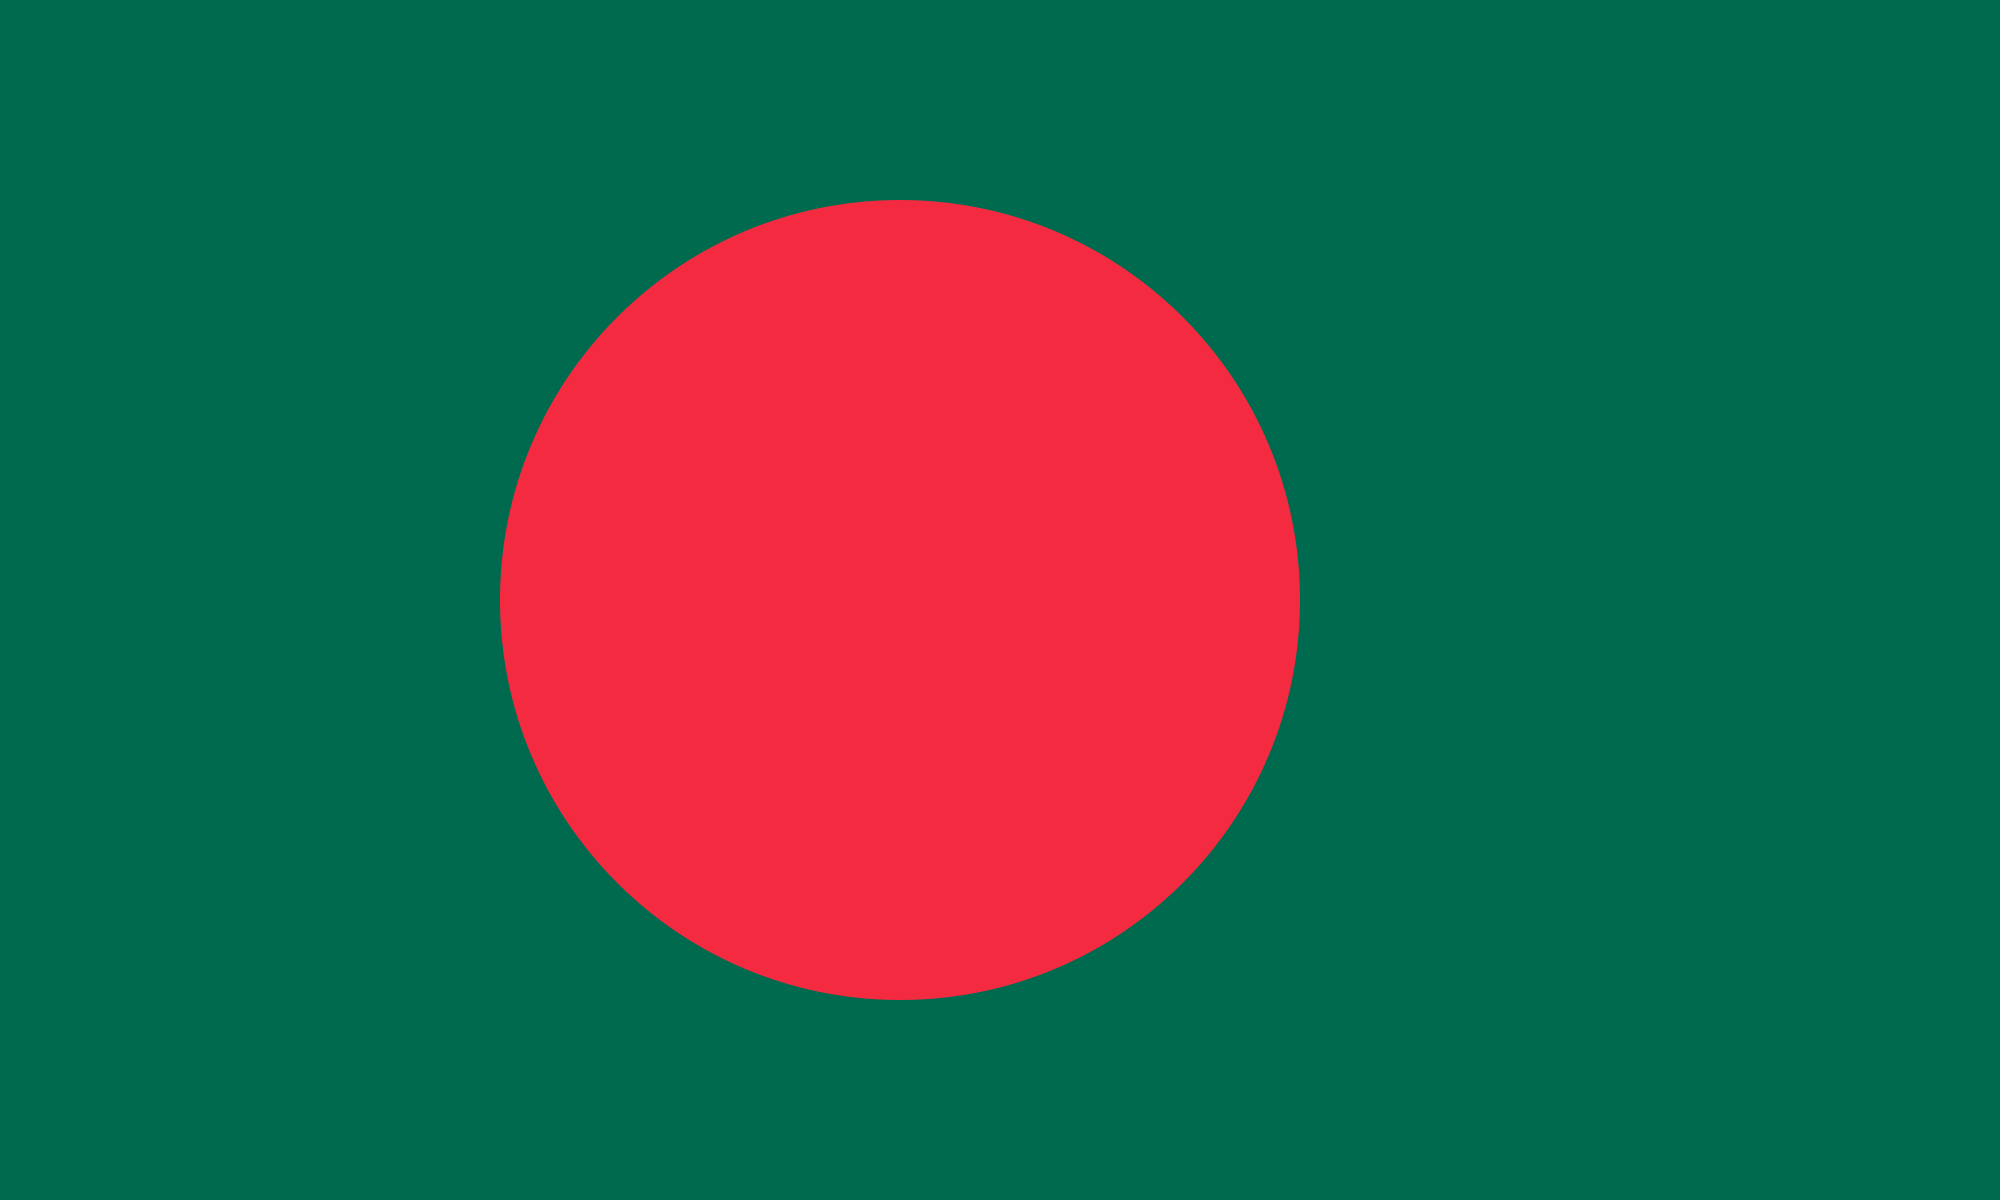 Red and Green Round Logo - Flag of Bangladesh